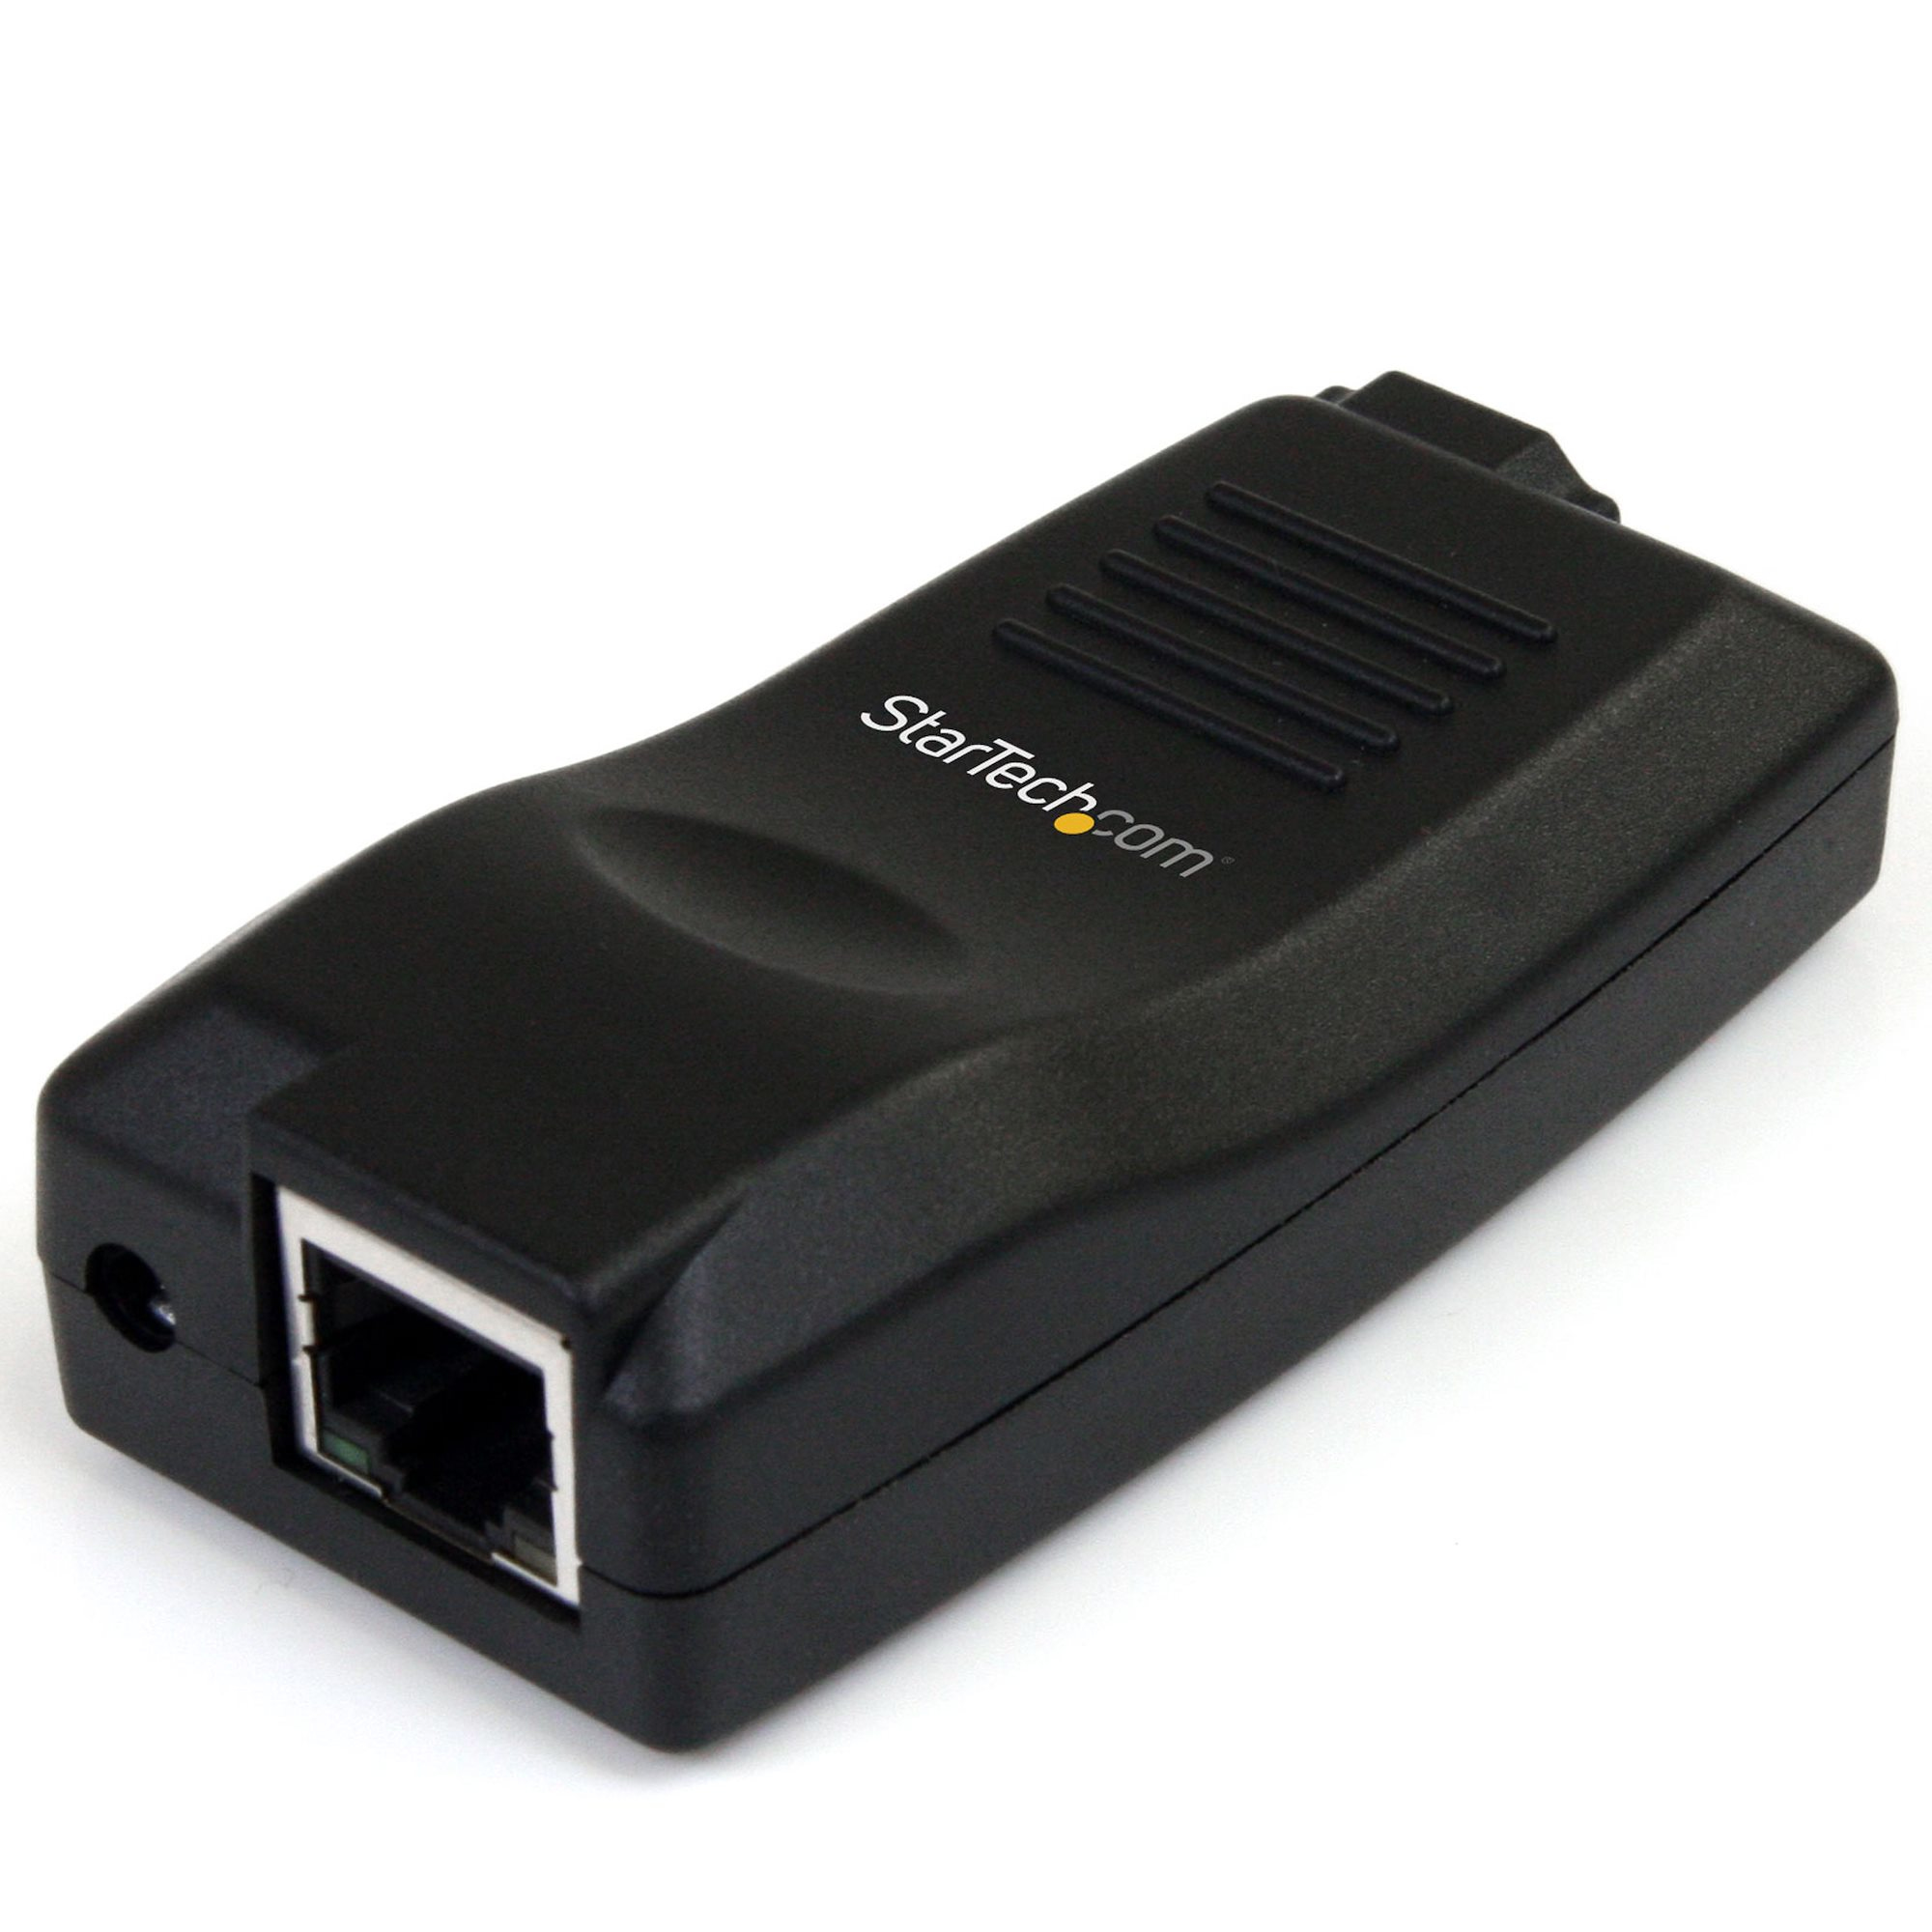 StarTech.com 10/100/1000 Mbps Gigabit 1 Port USB over IP Device Server - Windows 7 / XP / Vista ONLY